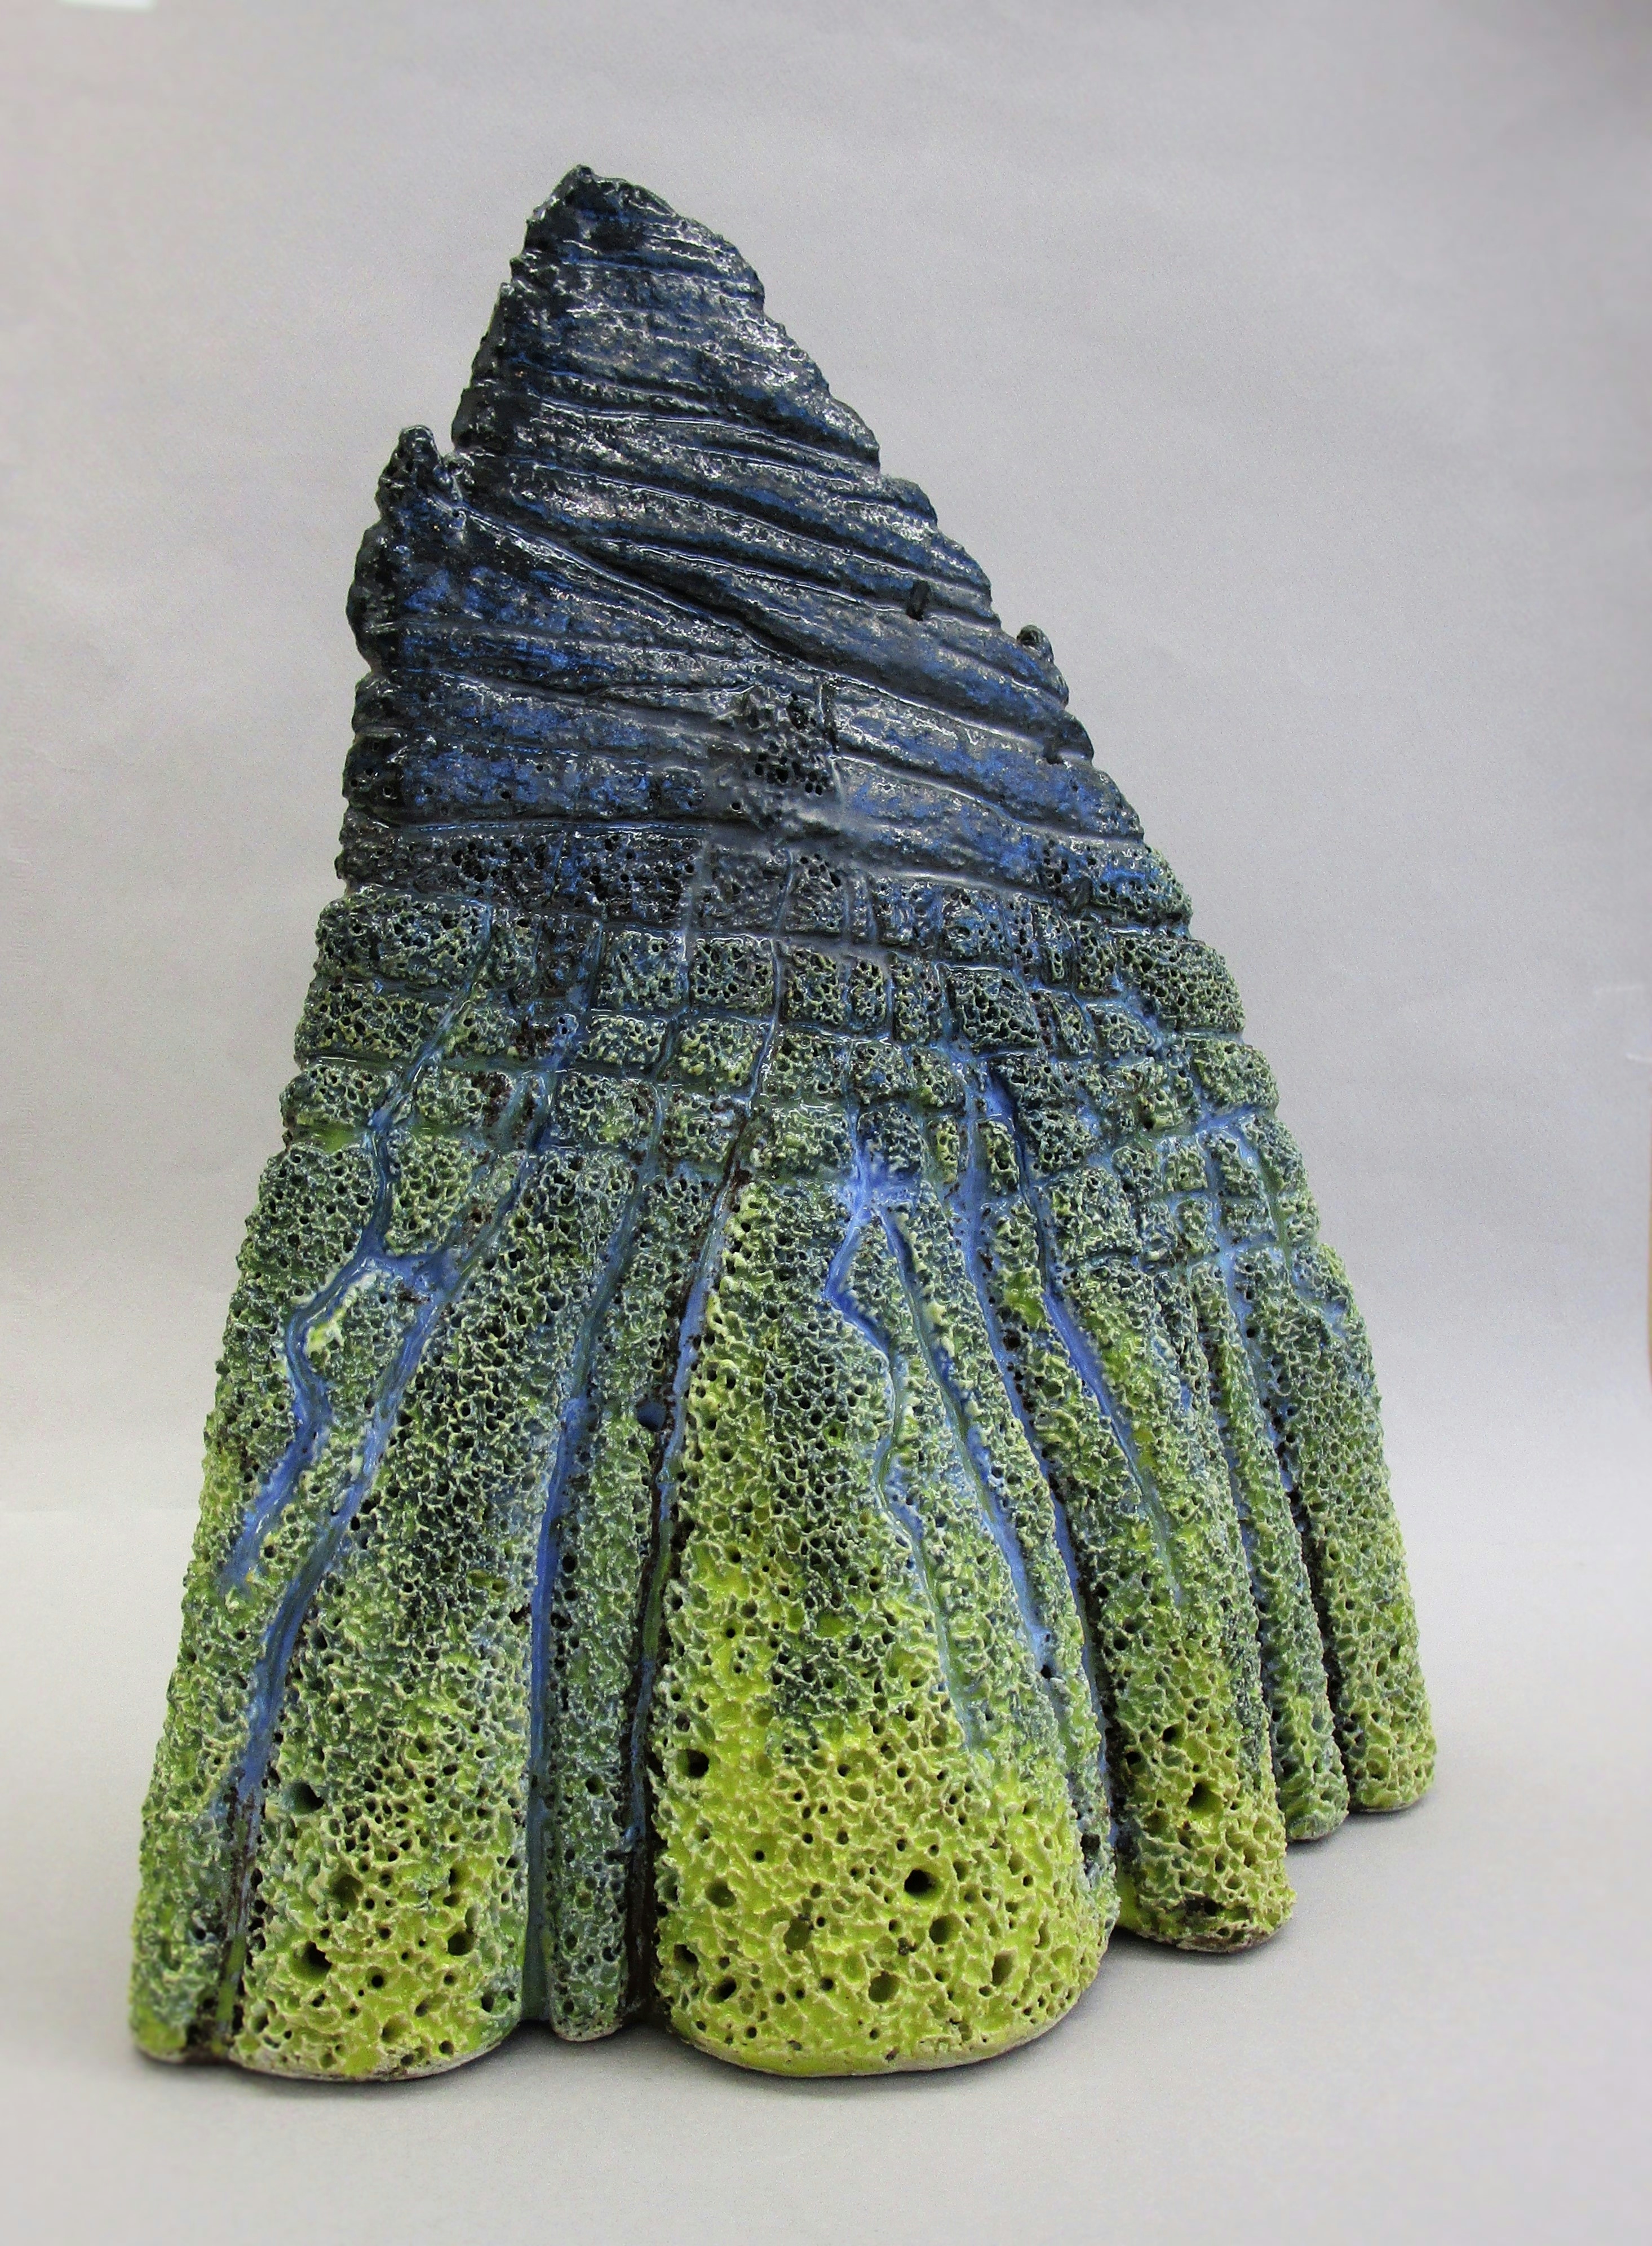 Mossy Mountain, ceramic sculpture